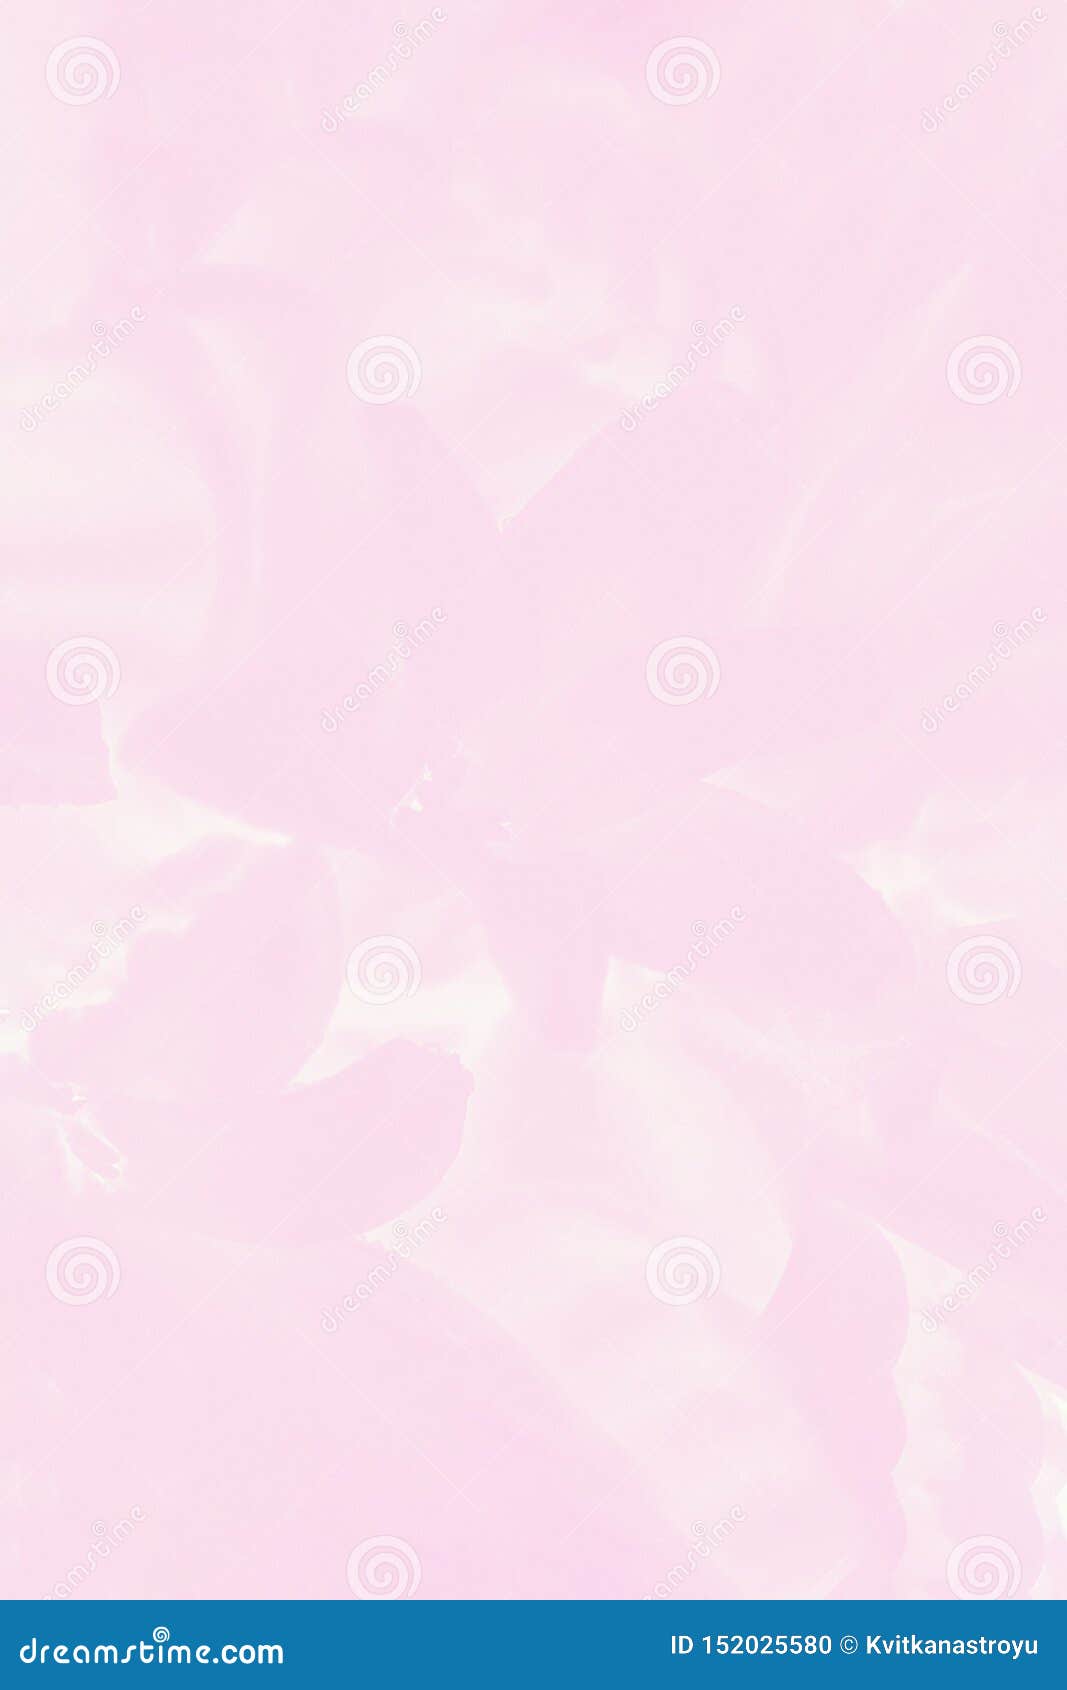 30000 Pastel Pink Pictures  Download Free Images on Unsplash